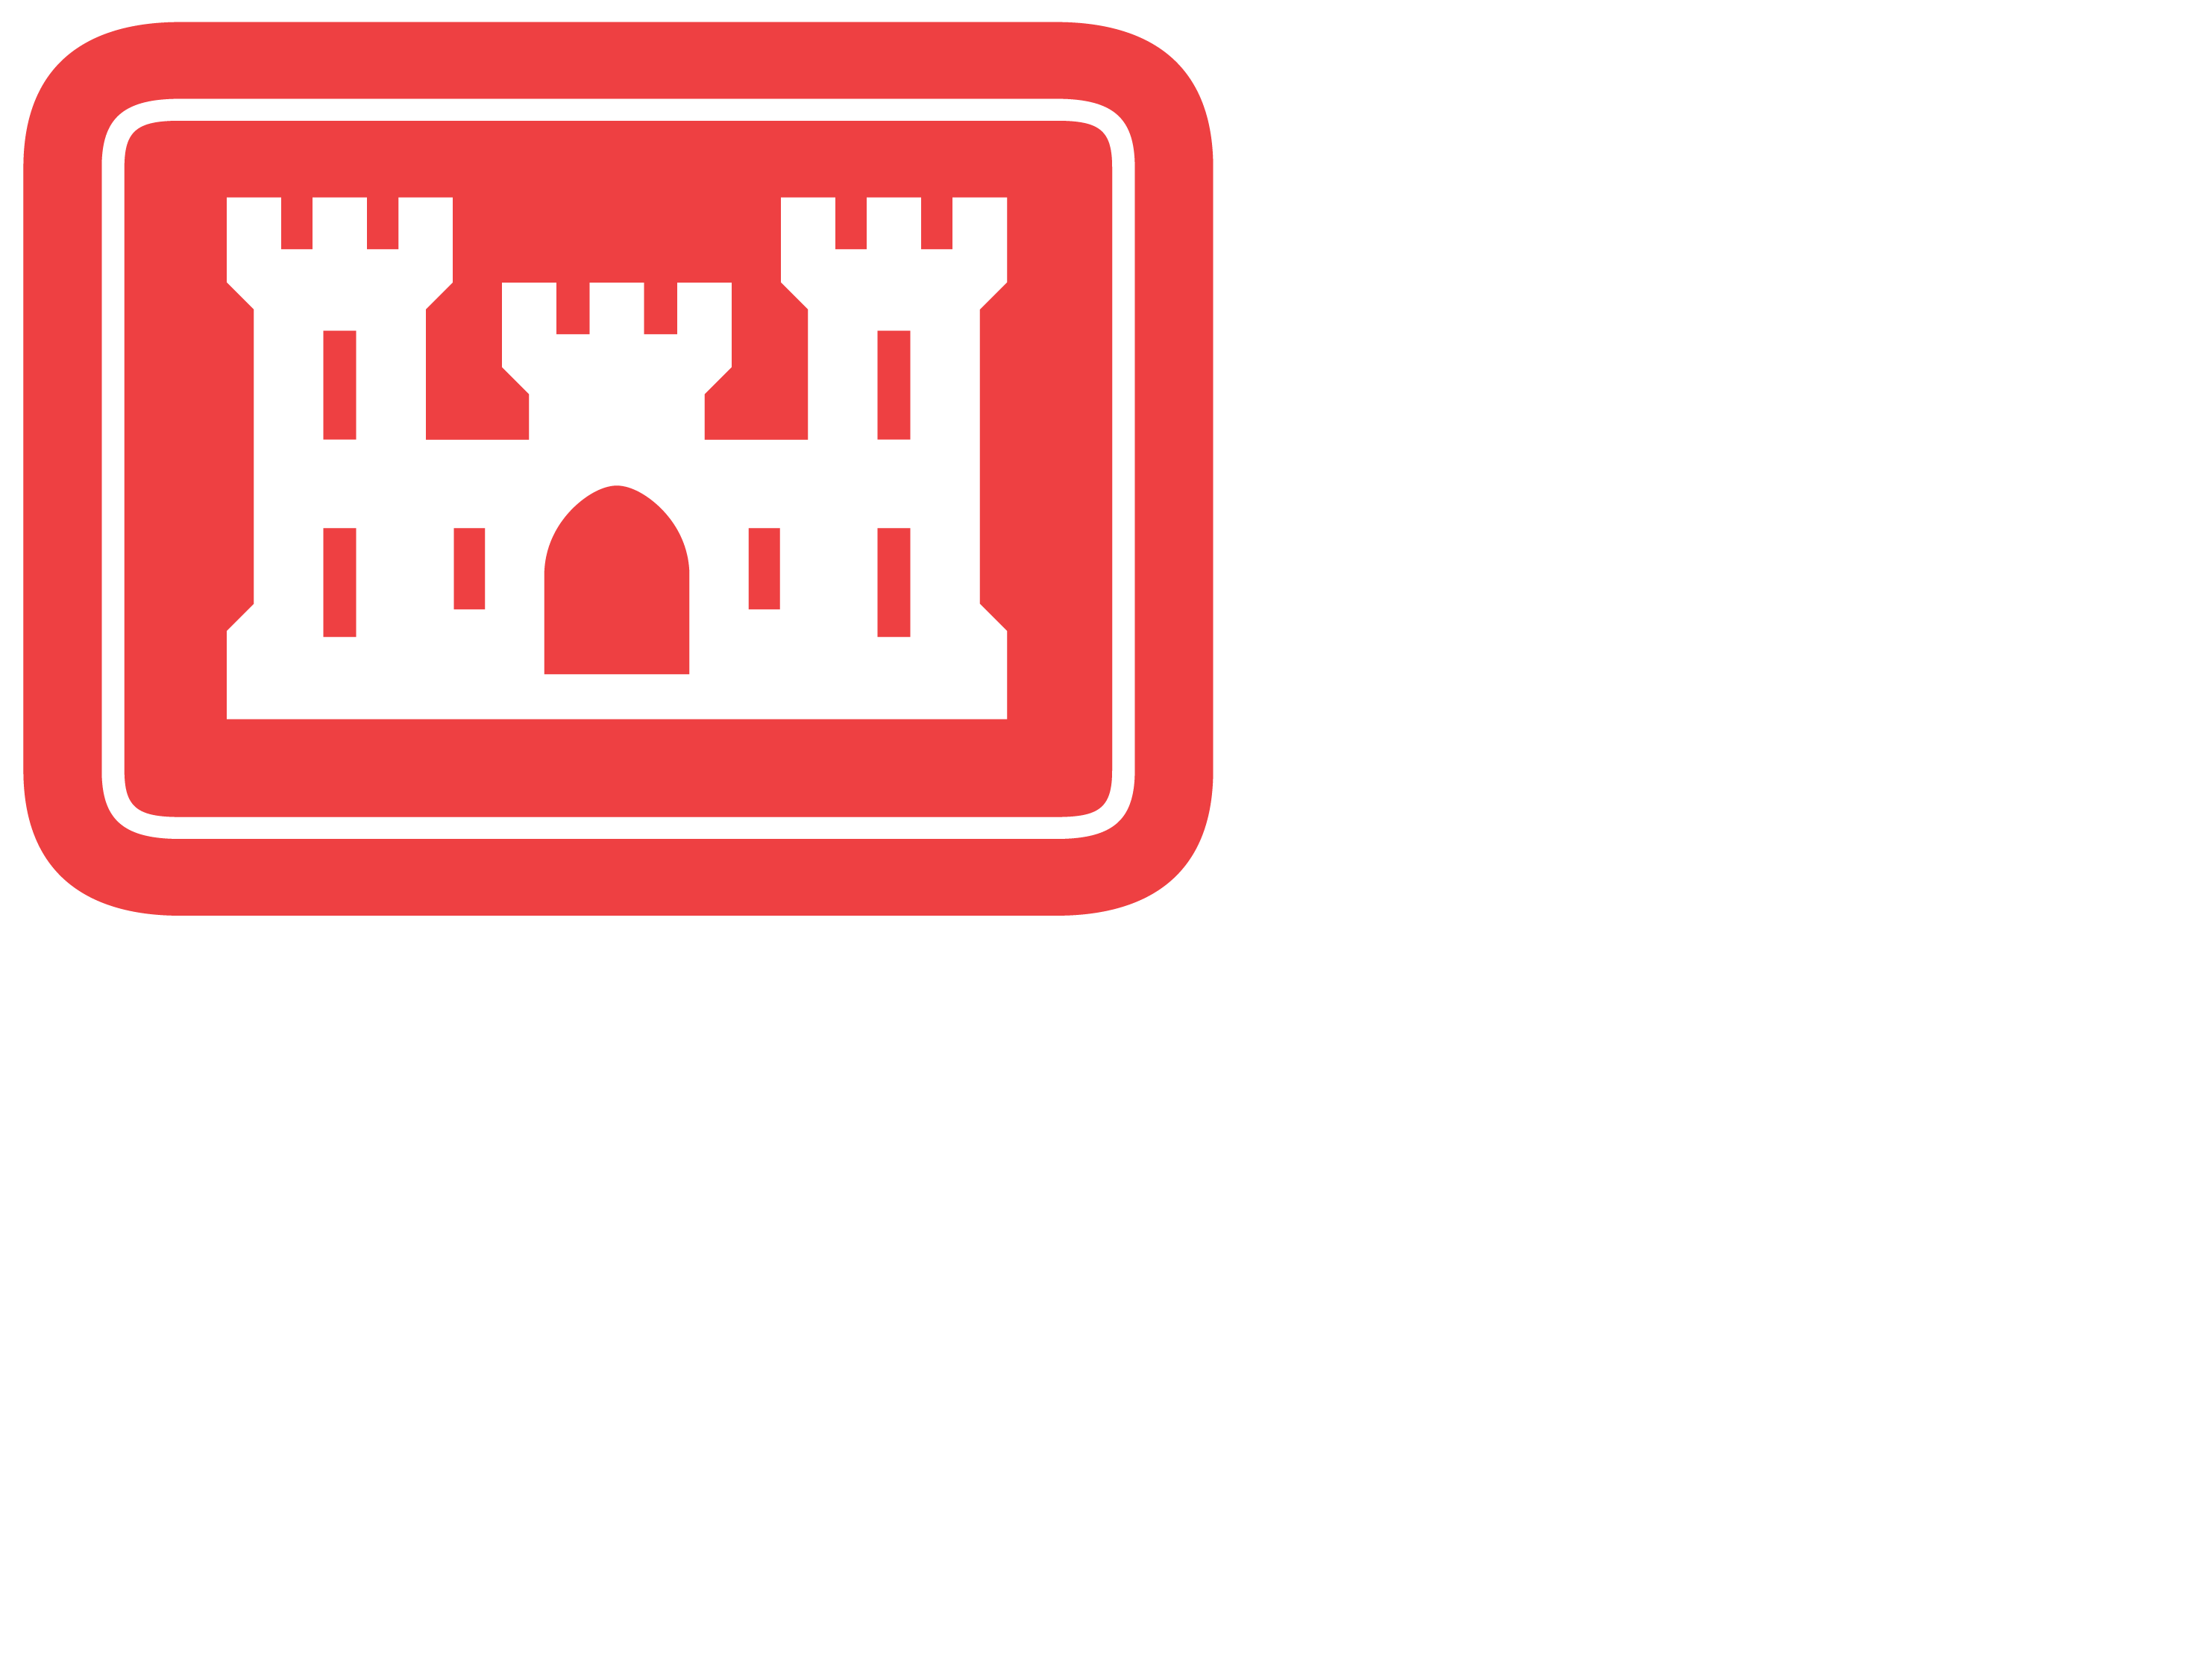 Corps logo